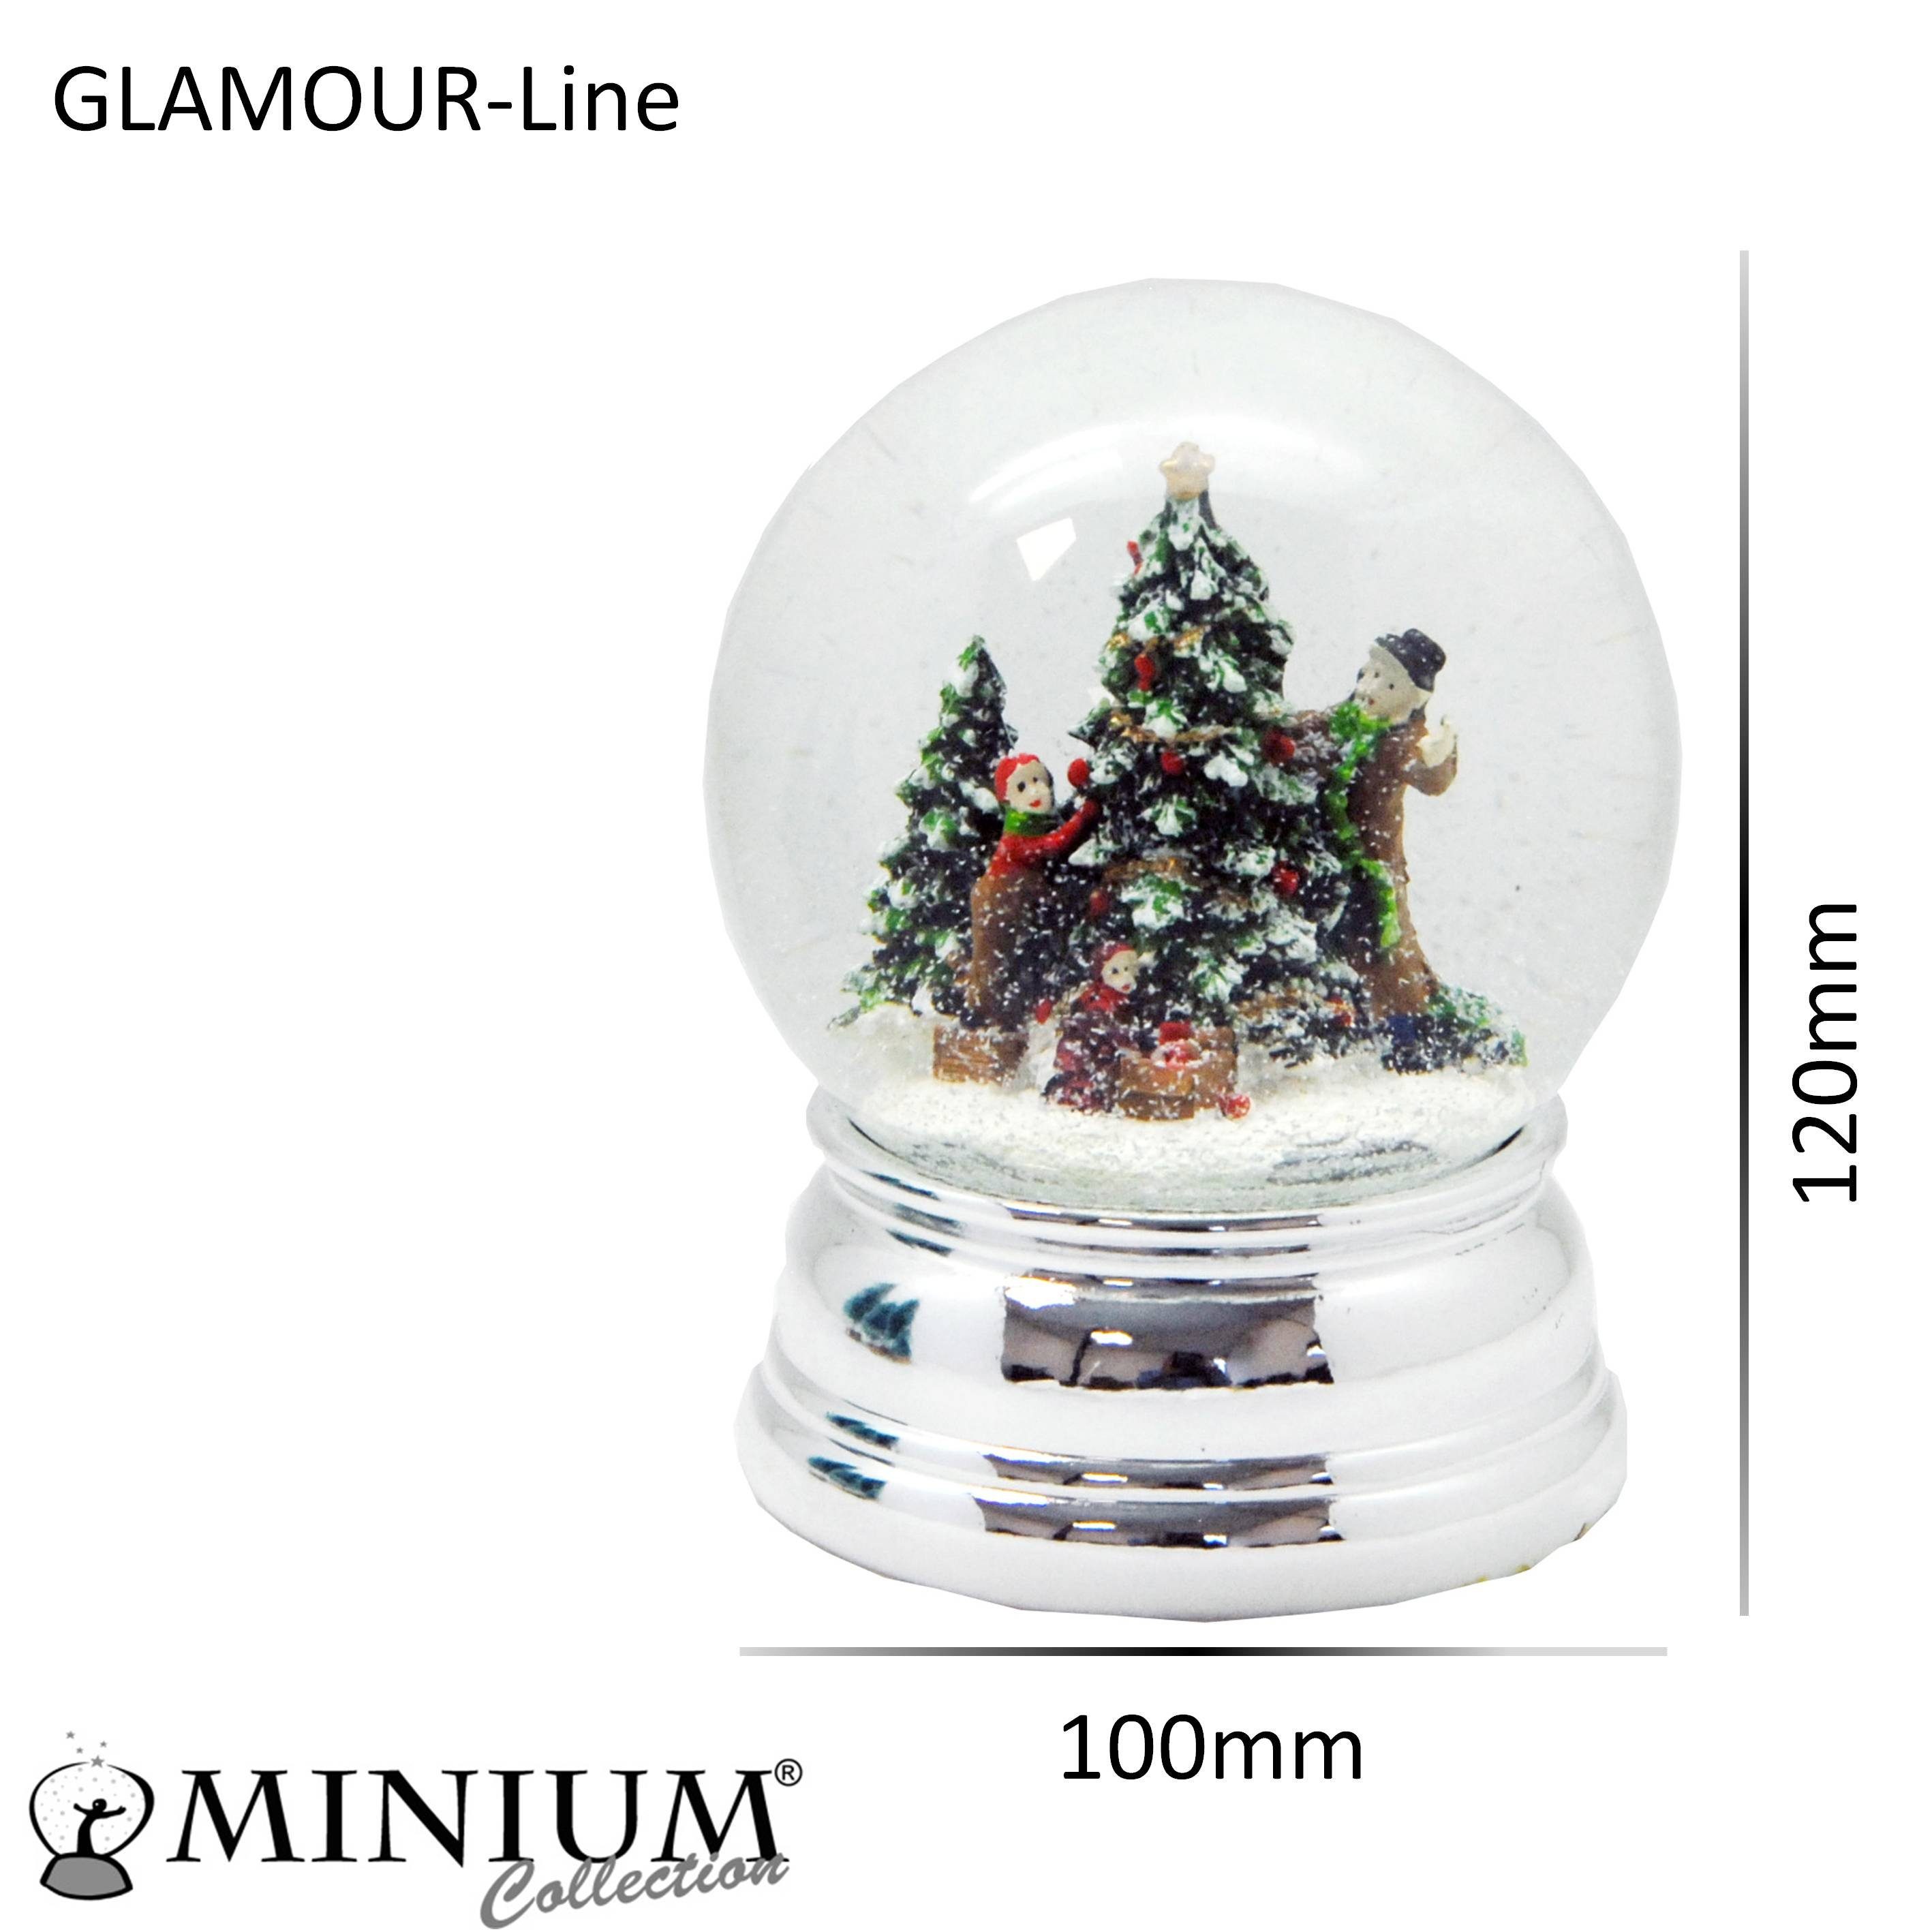 Silber Line Glamour schmücken MINIUM-Collection Sockel geschwungen 100mm Schneekugel Christbaum